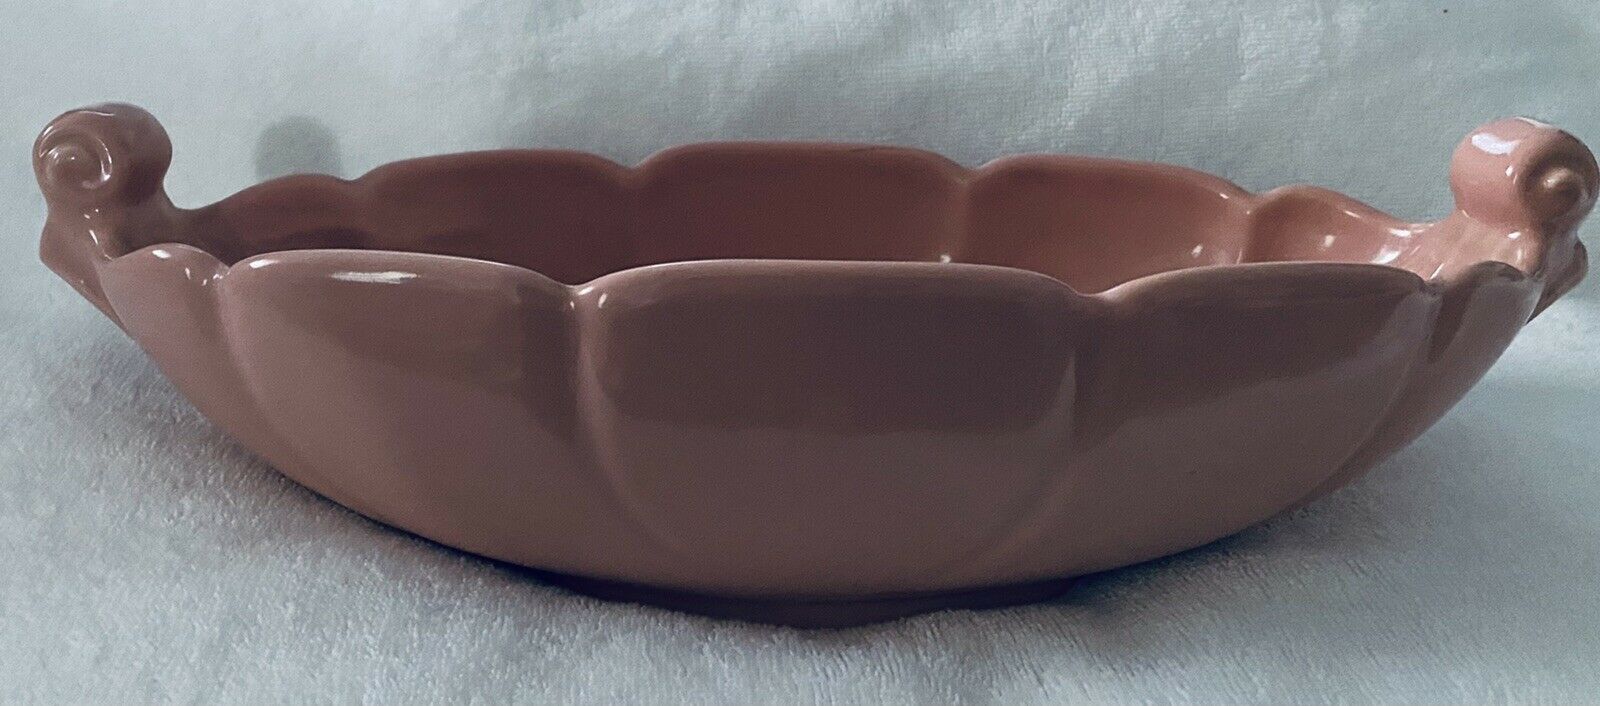 Vintage Abingdon USA Pottery Console Bowl - Pink  #532 Fern Leaf 14.25” Art Deco